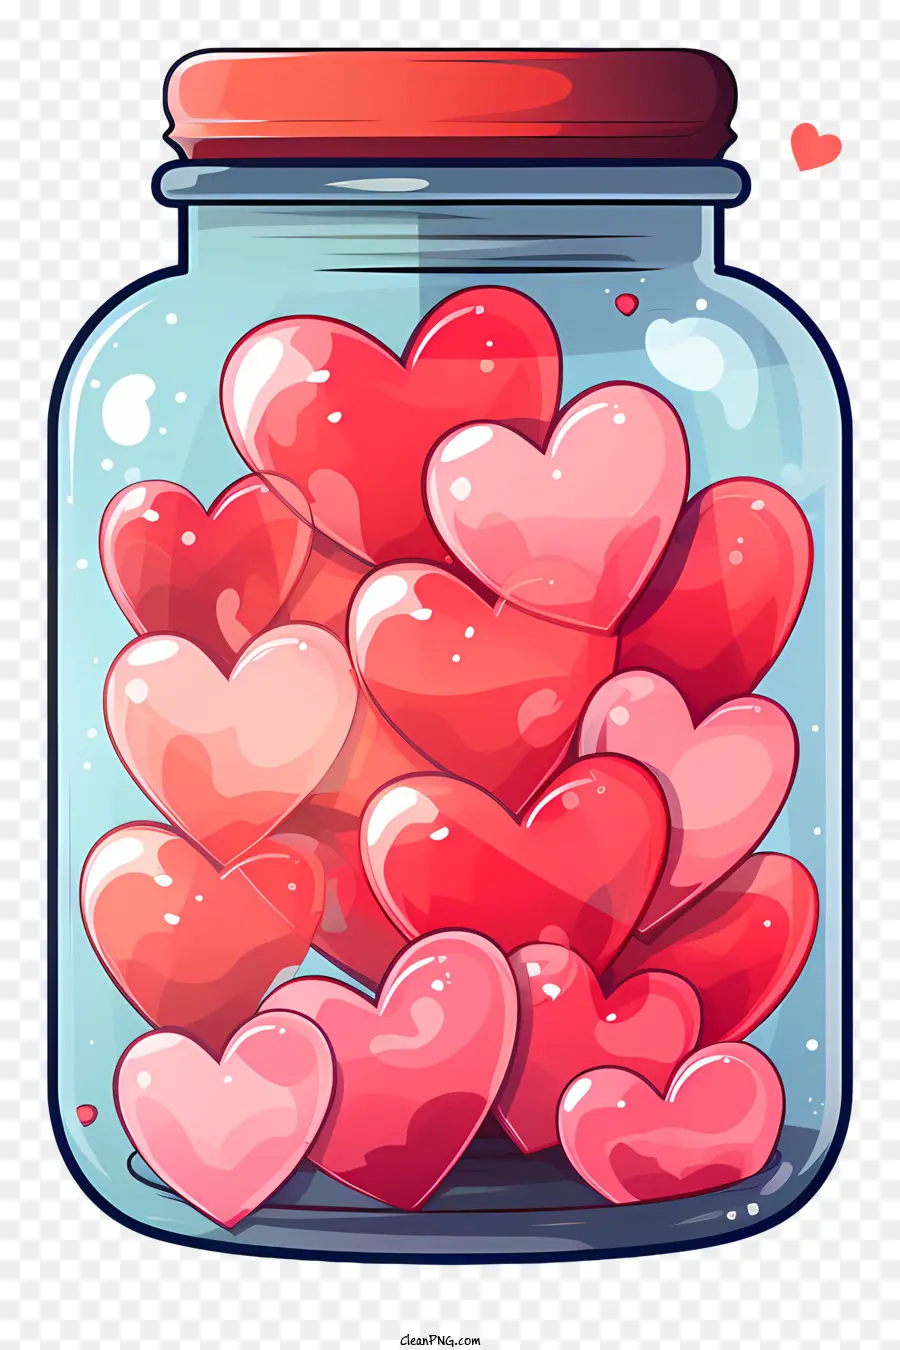 mason jar jar of hearts transparent glass jar hearts floating floating hearts